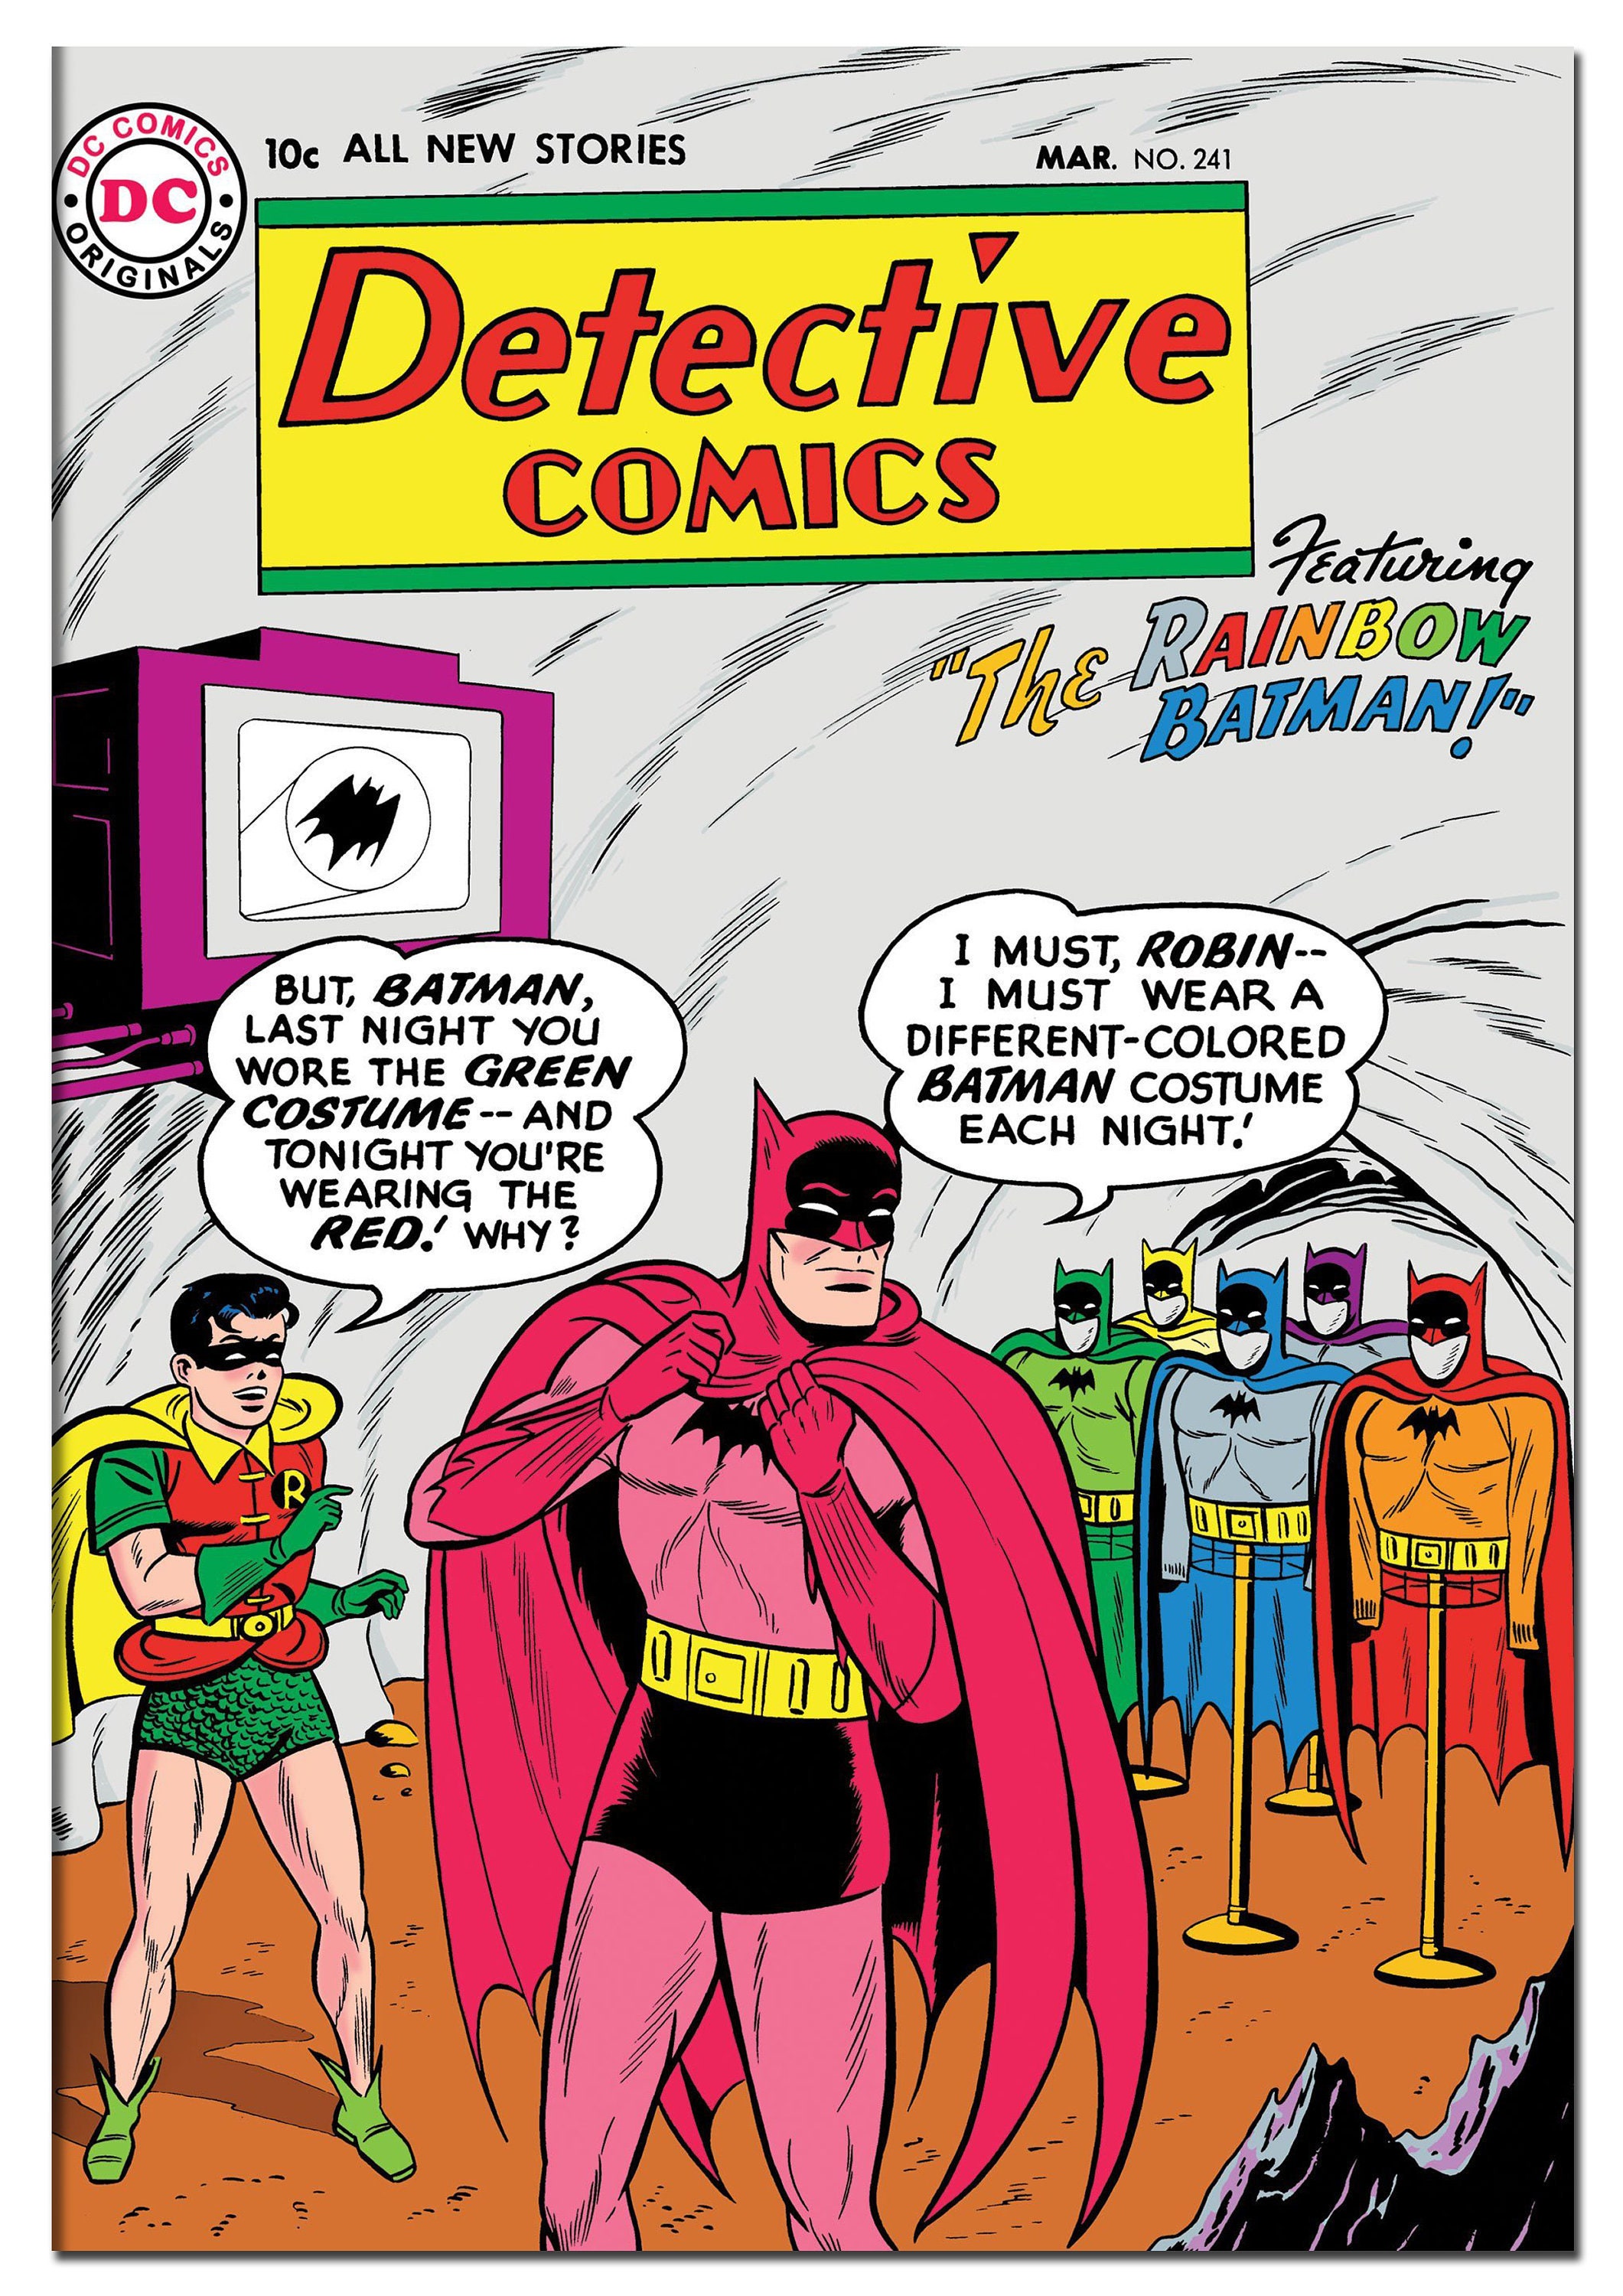 Detective Comics Issue 241 March 1957 the Rainbow Batman Front